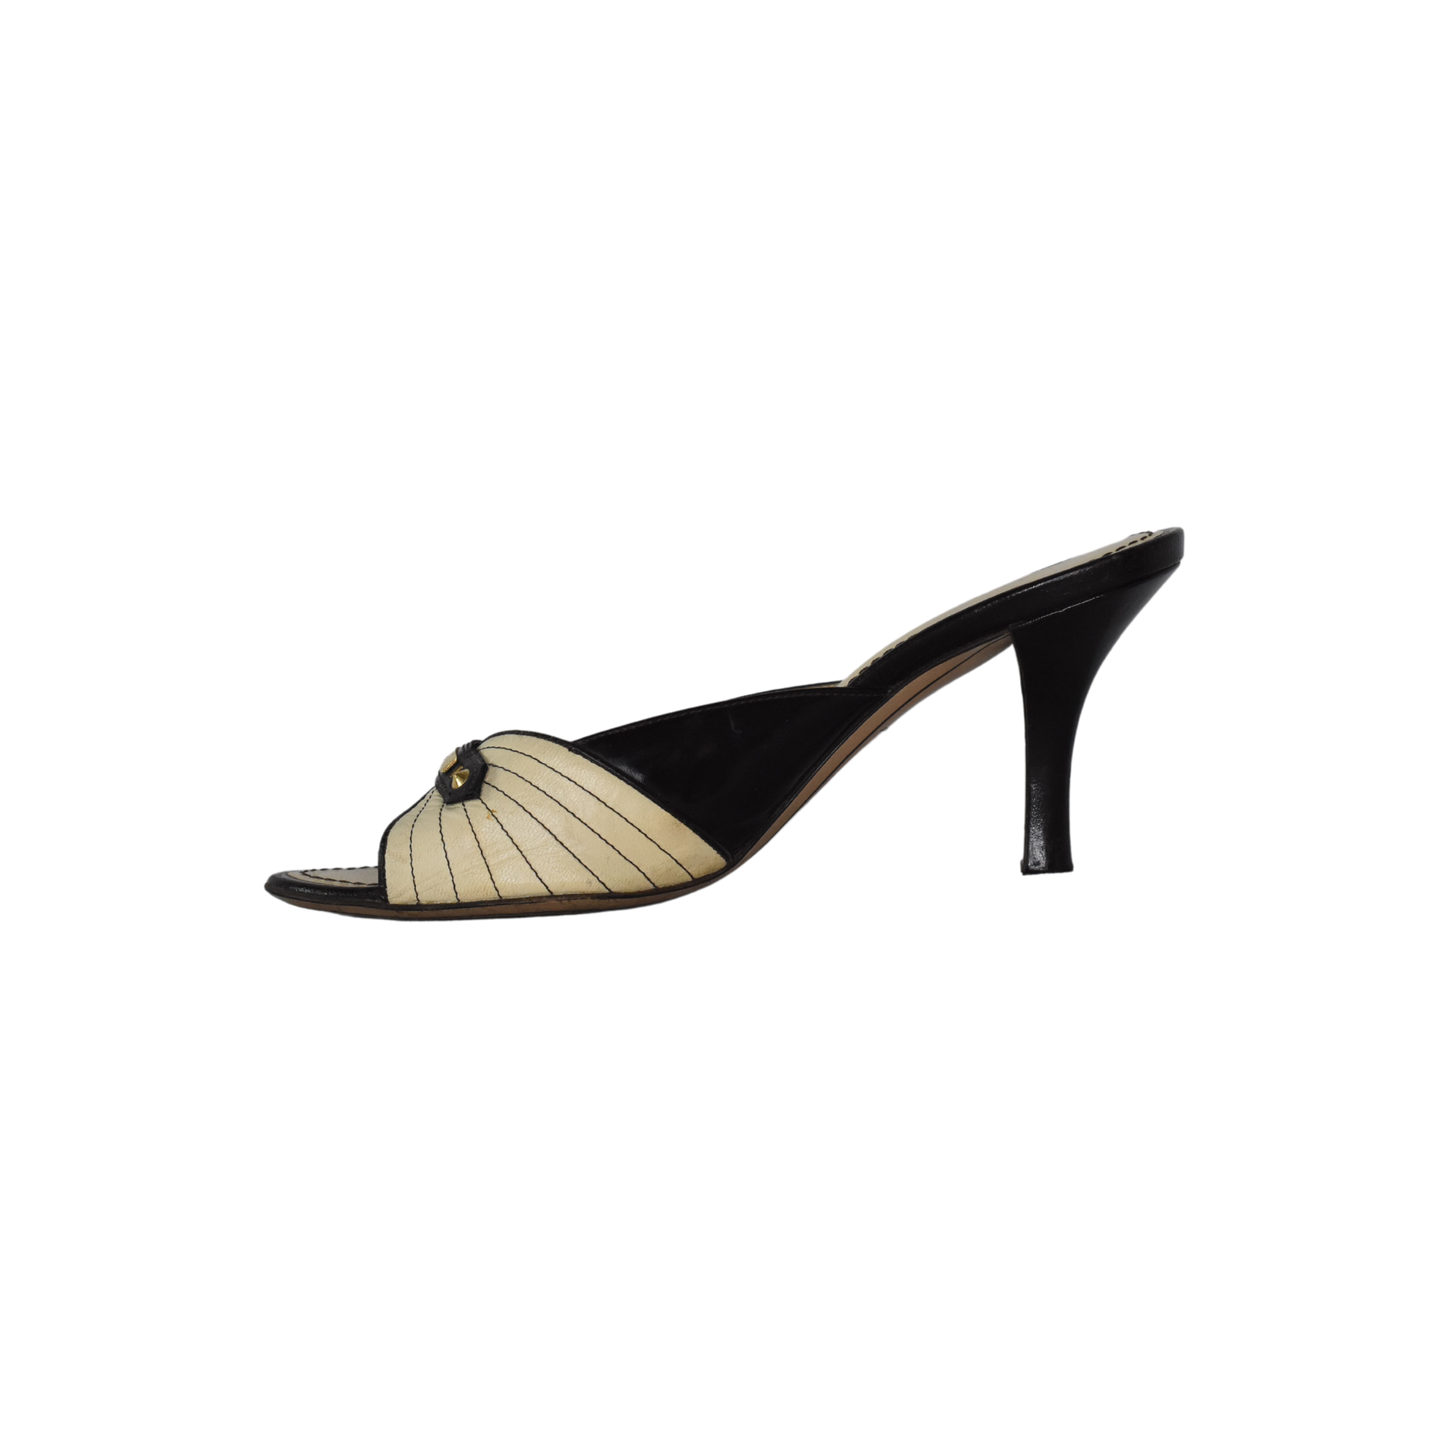 Louis Vuitton Open-Toe High Heels Cream, Black Size 36 SKU 000146-4